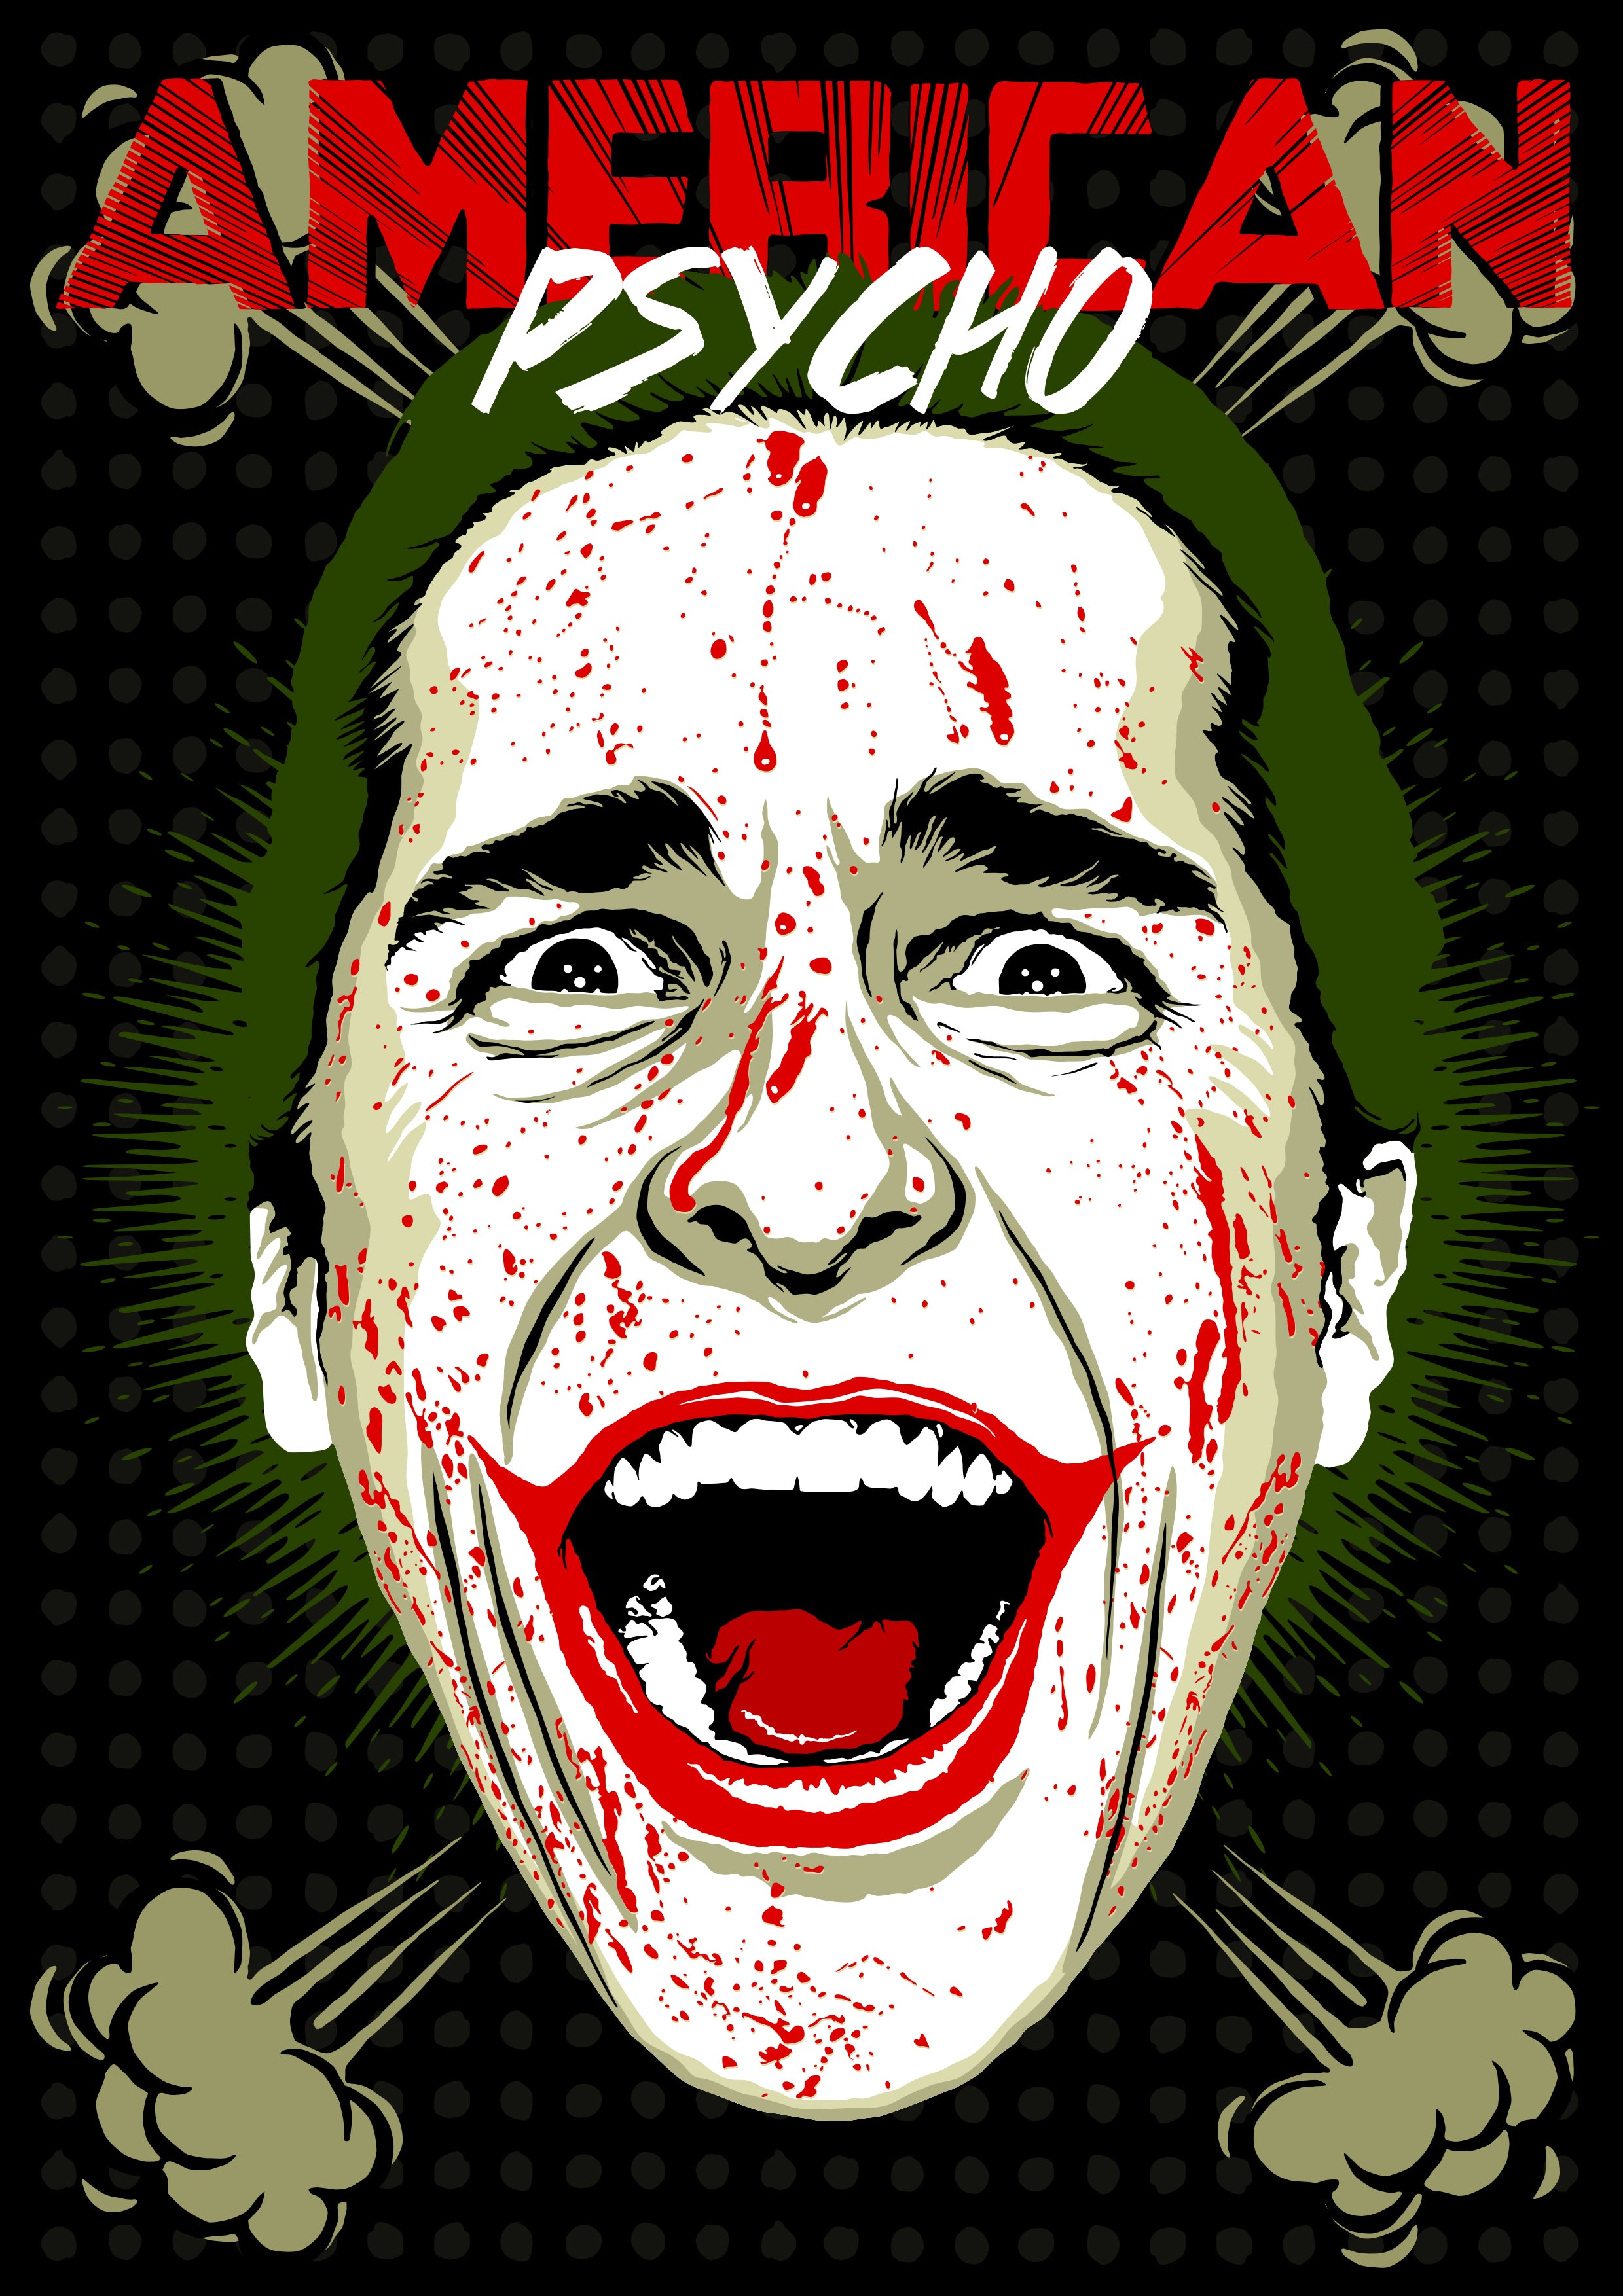 "American Psycho - The Joker" by Butcher Billy